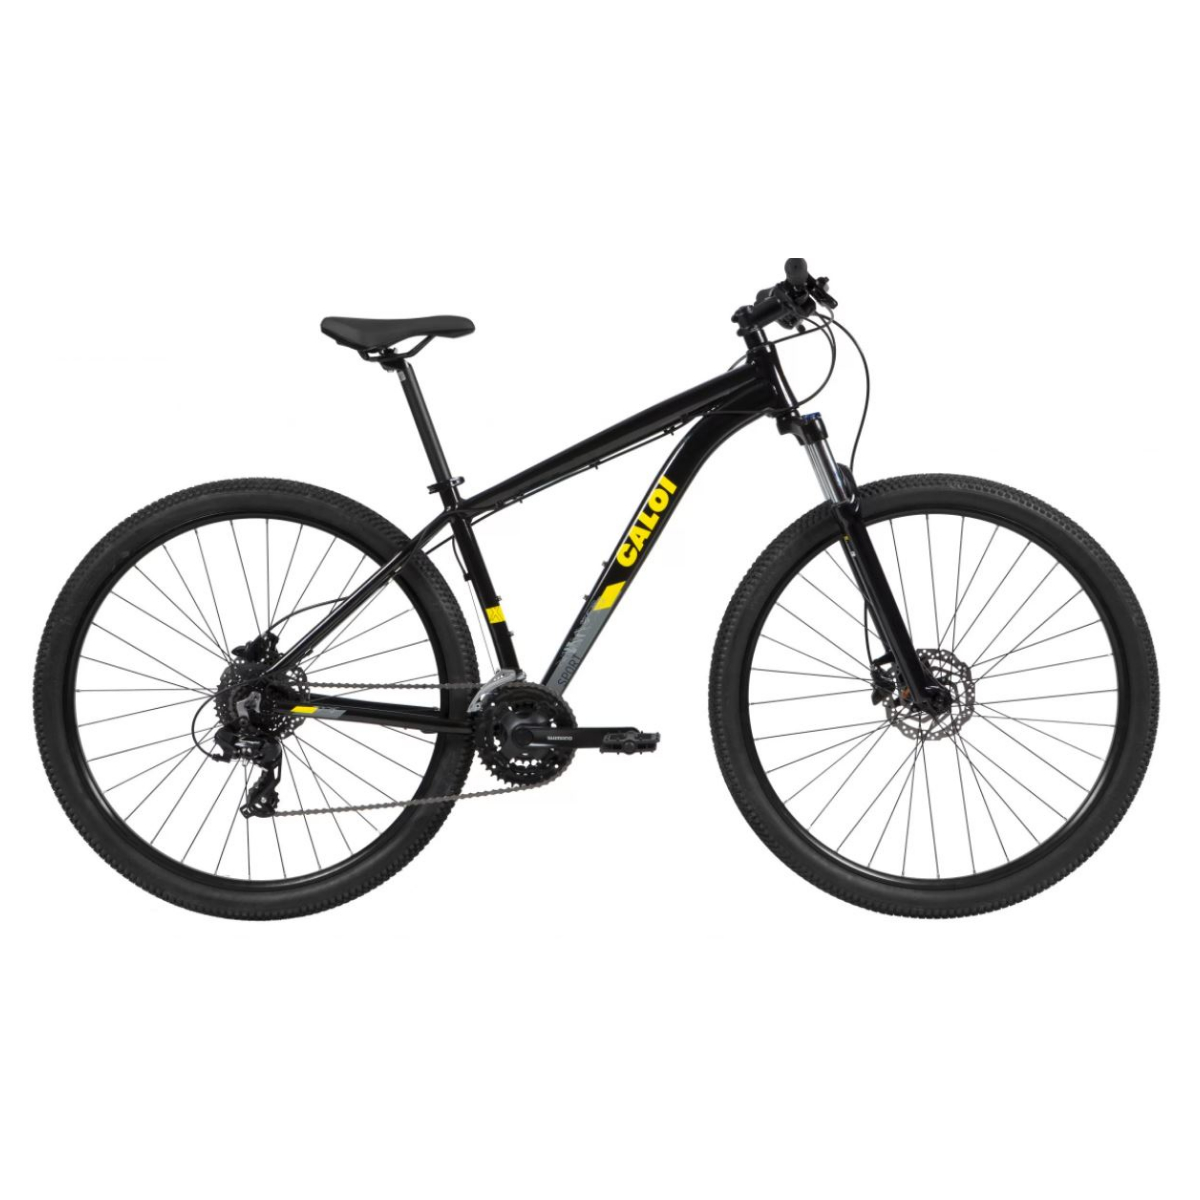 Caloi Explorer Sport Mountain Bike Aro 29 2021 - Preto